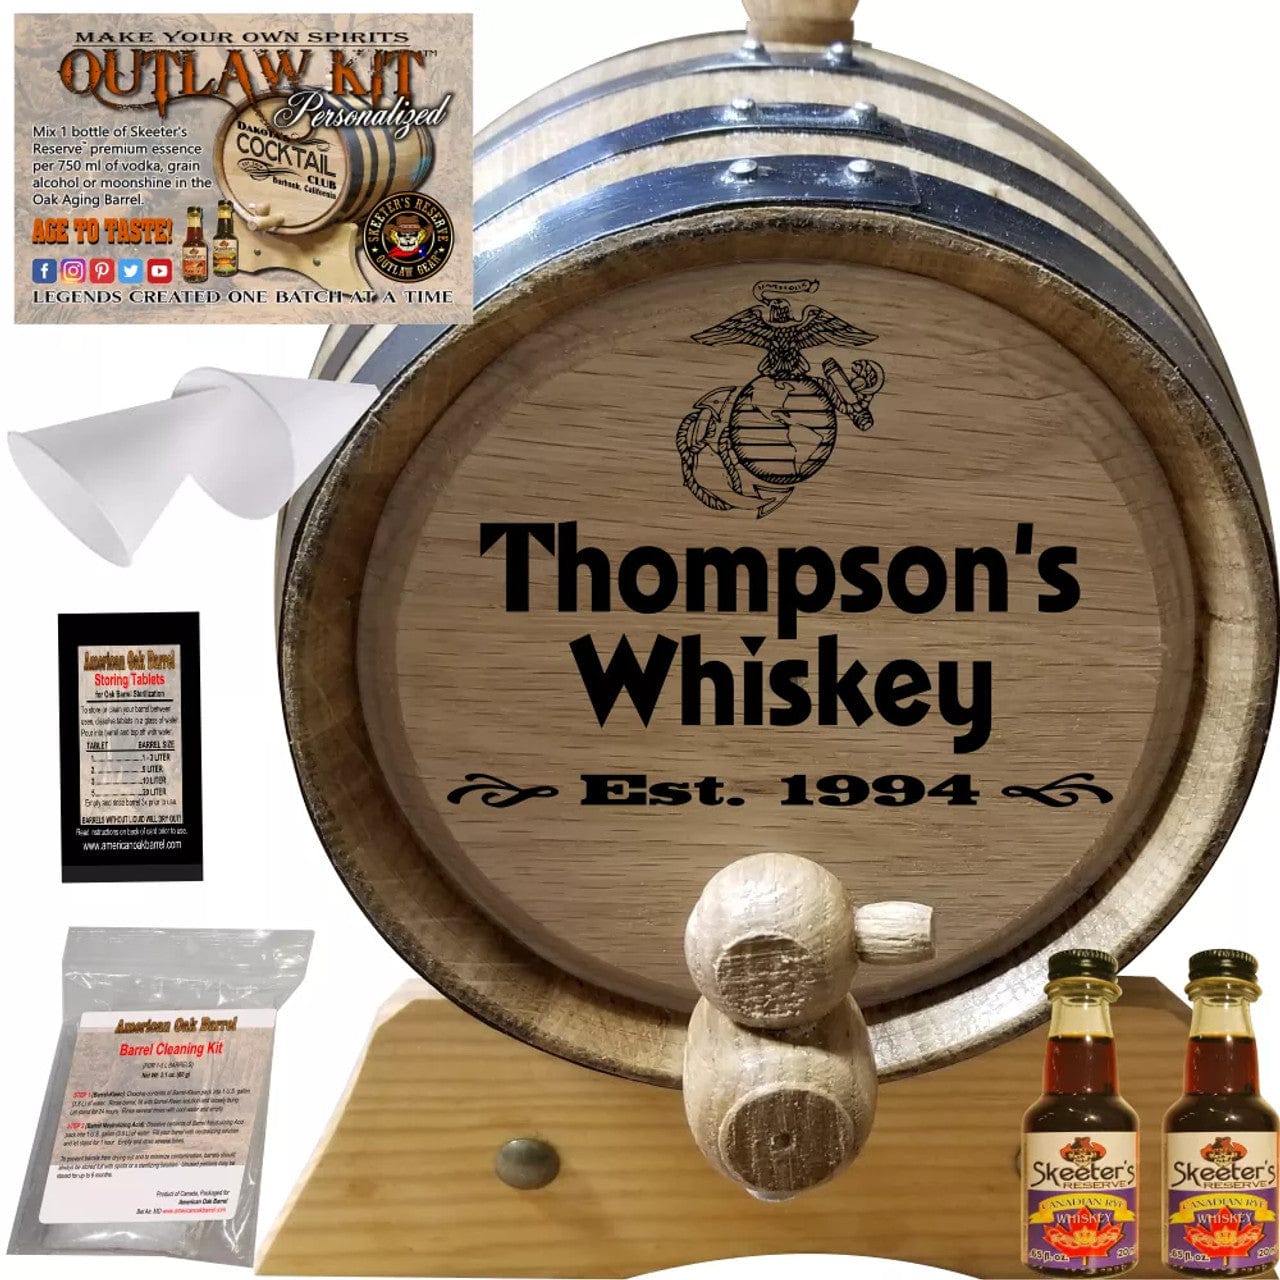 American Oak Barrel Outlaw Kits 1 Liter (.26 gallon) / Dark Jamaican Rum American Oak Barrel Personalized Outlaw Kit™ (016) Marines Spirit - Create Your Own Spirits